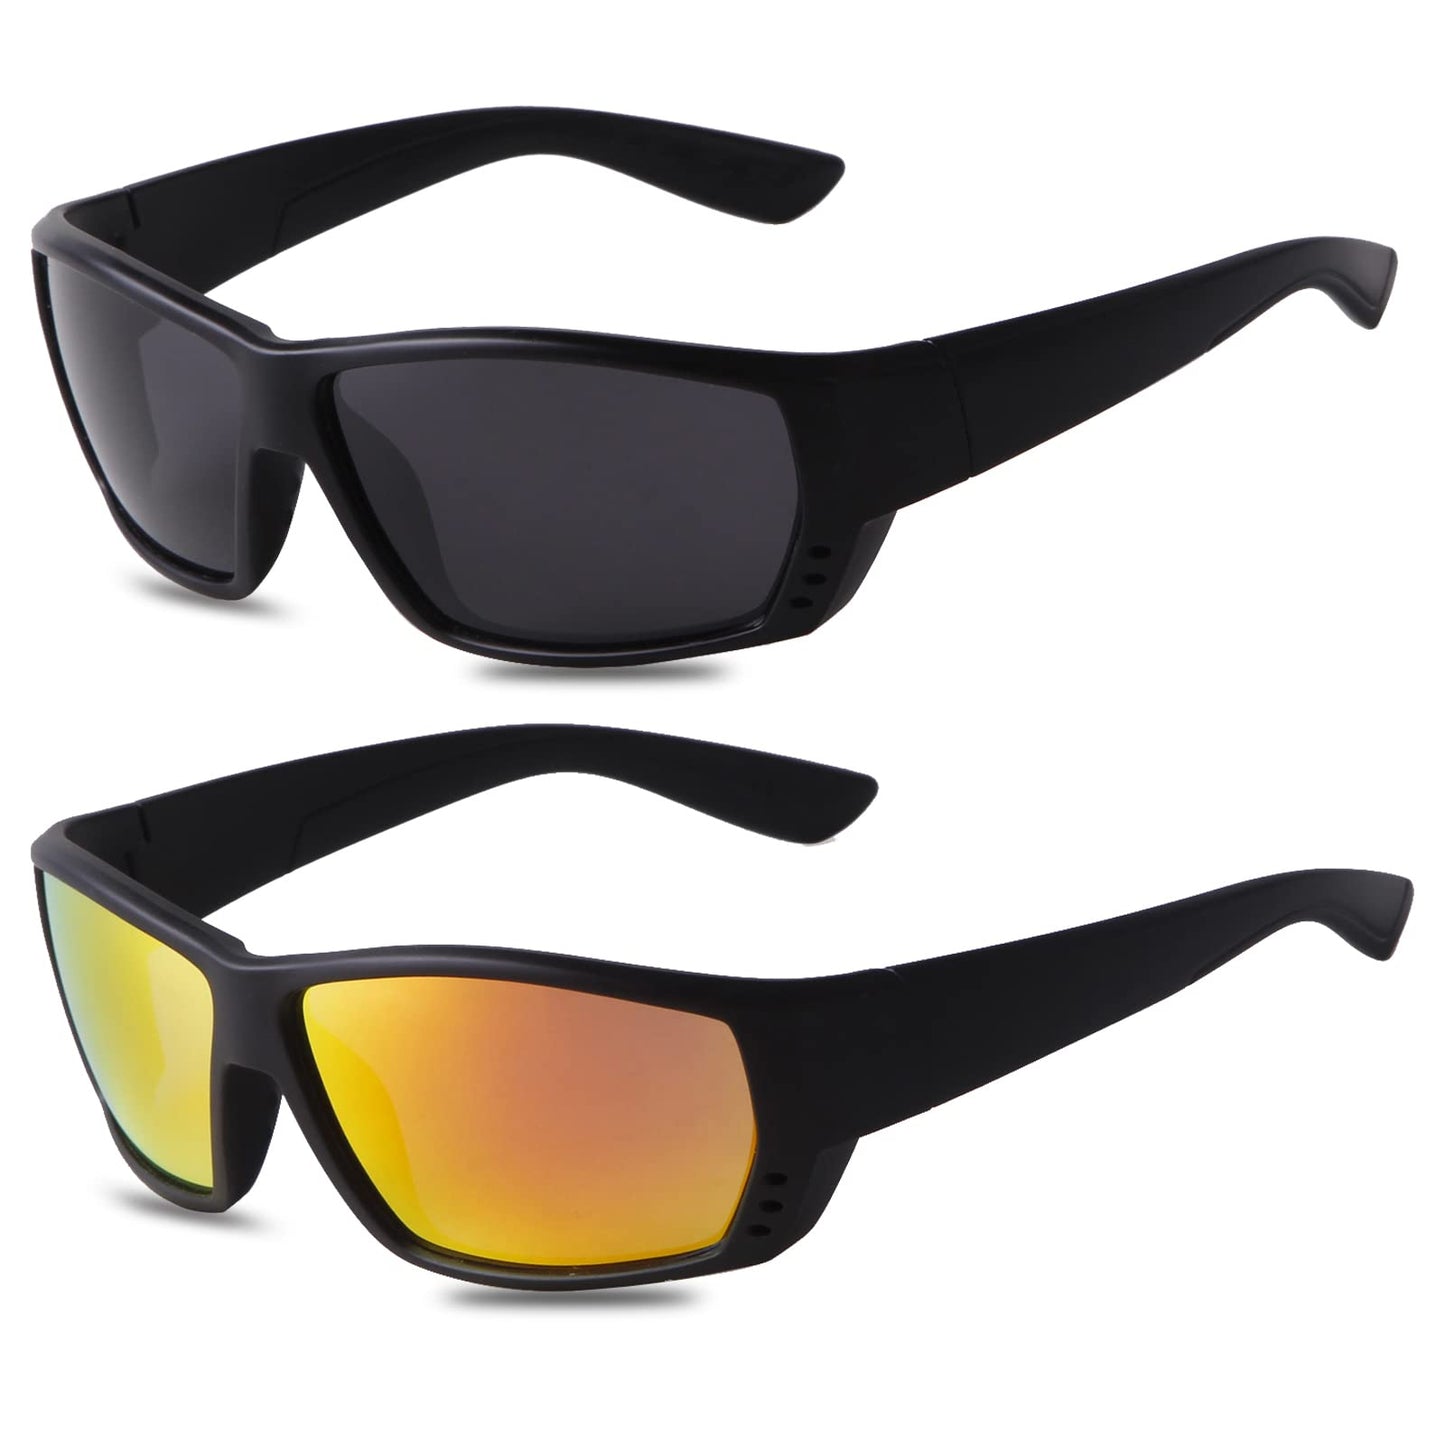 SDinm Polarized Sports Sunglasses for Men Women Cycling Fishing Golf Driving Shades Sun Glasses UV Protection